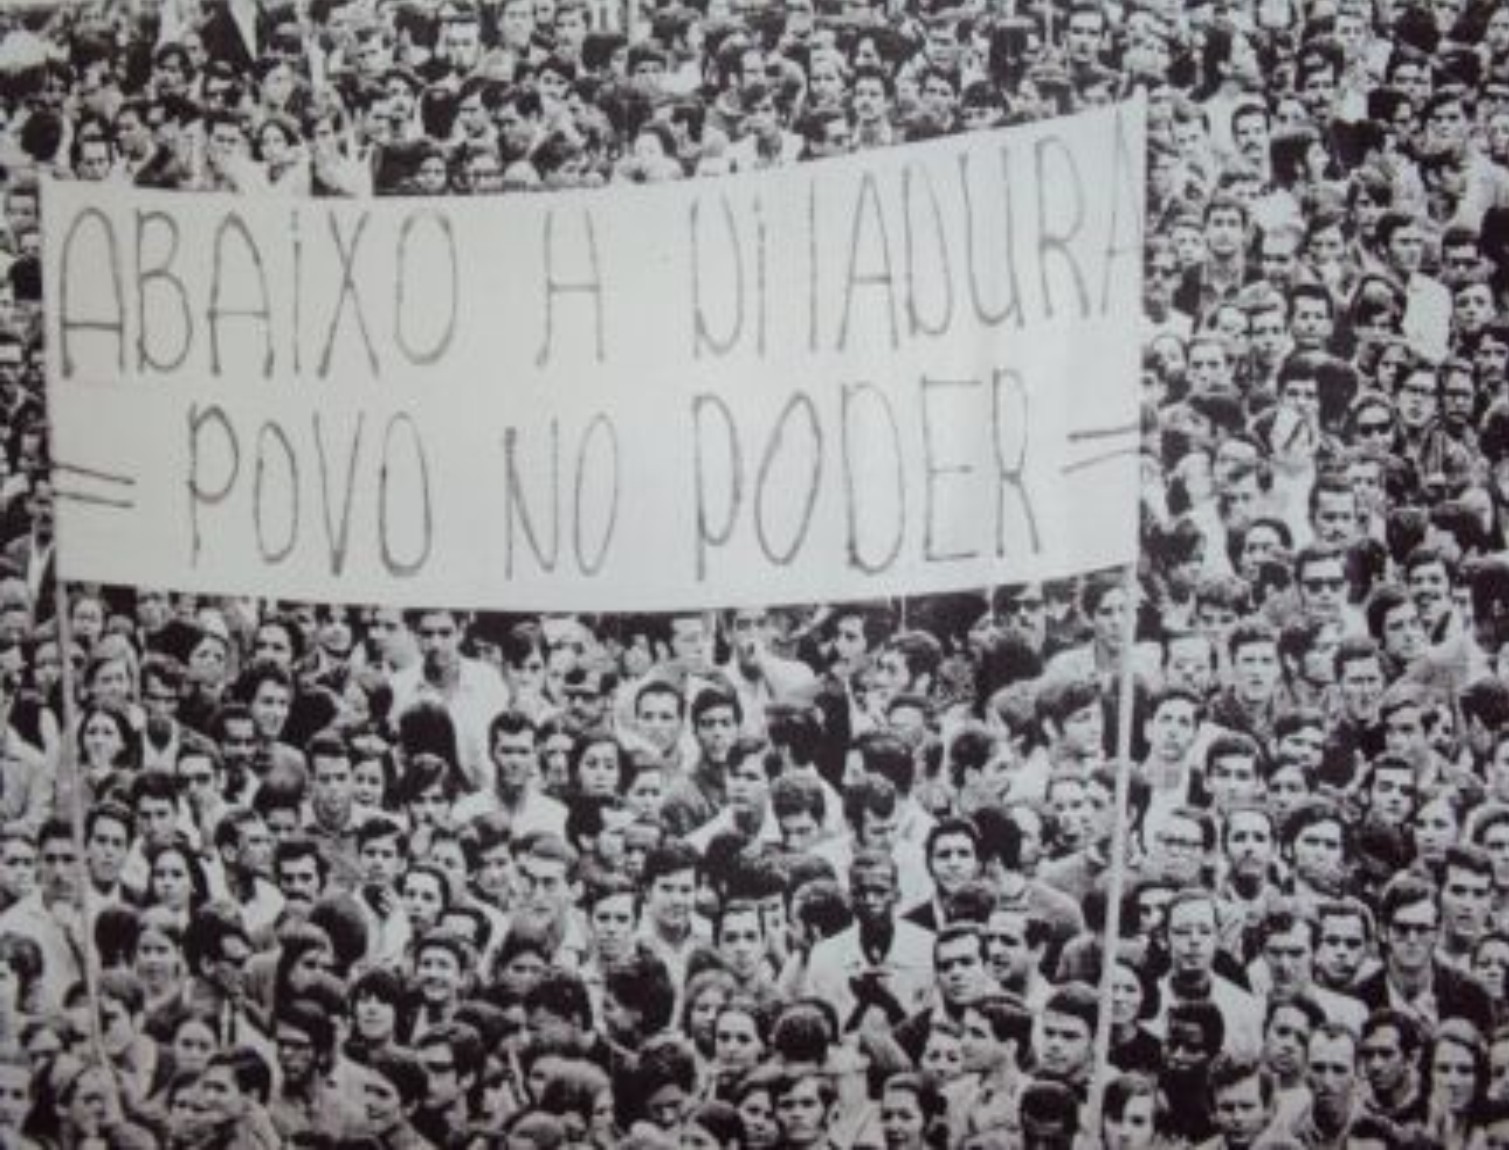 Karol Cavalcante: “A face verdadeira dos manifestantes de 13/3”